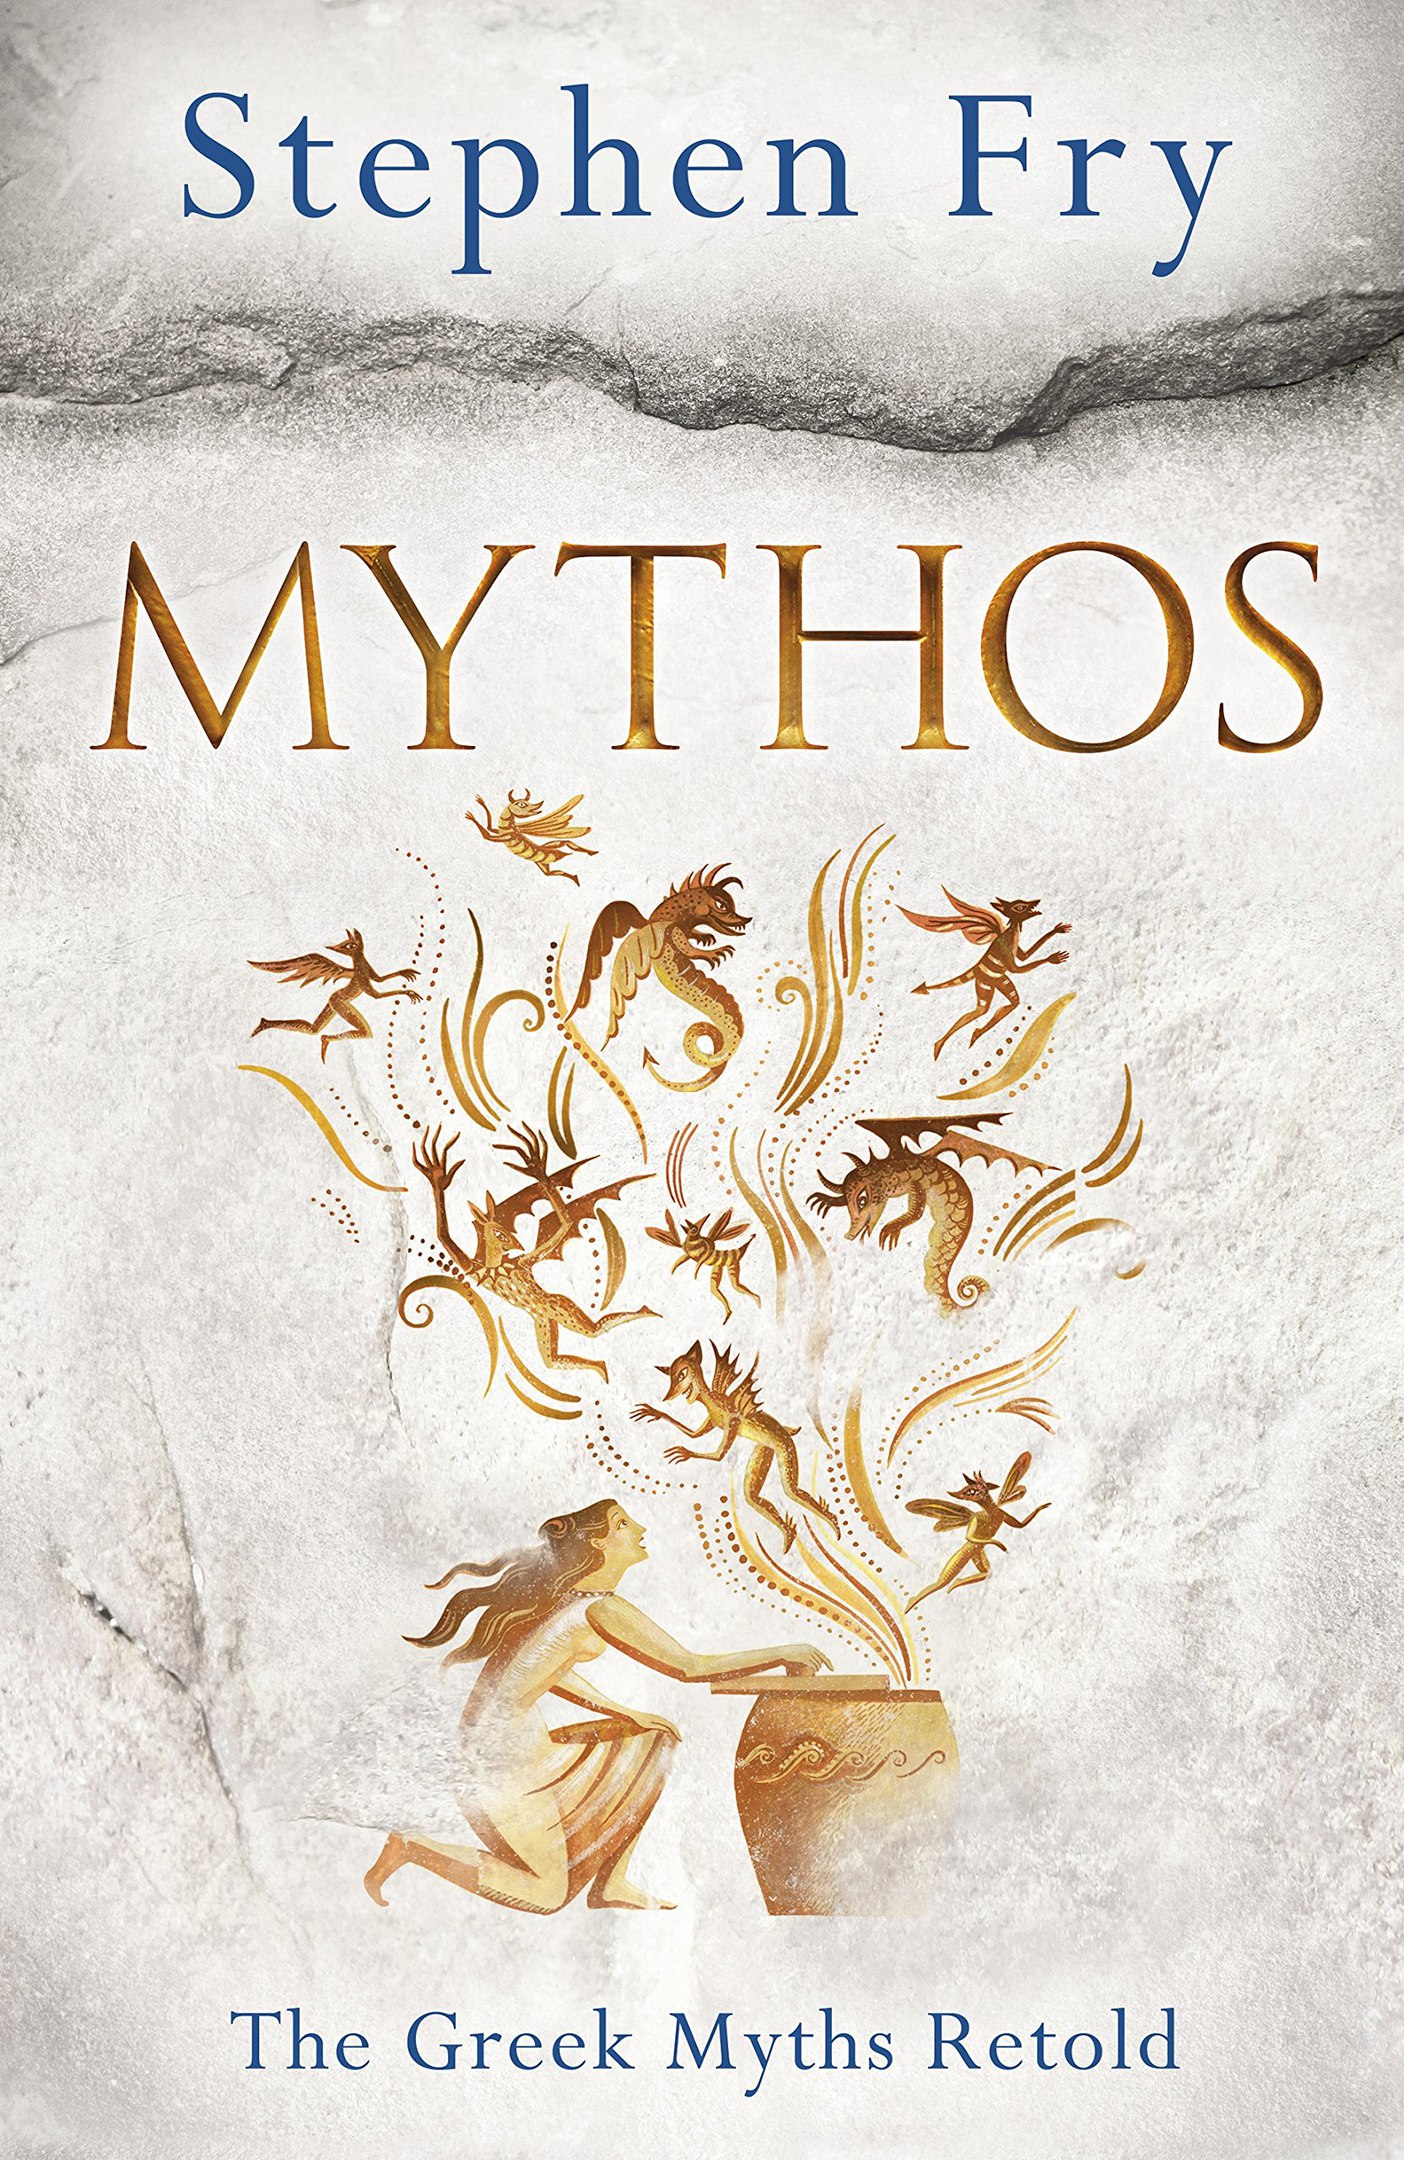 stephen fry mythos series